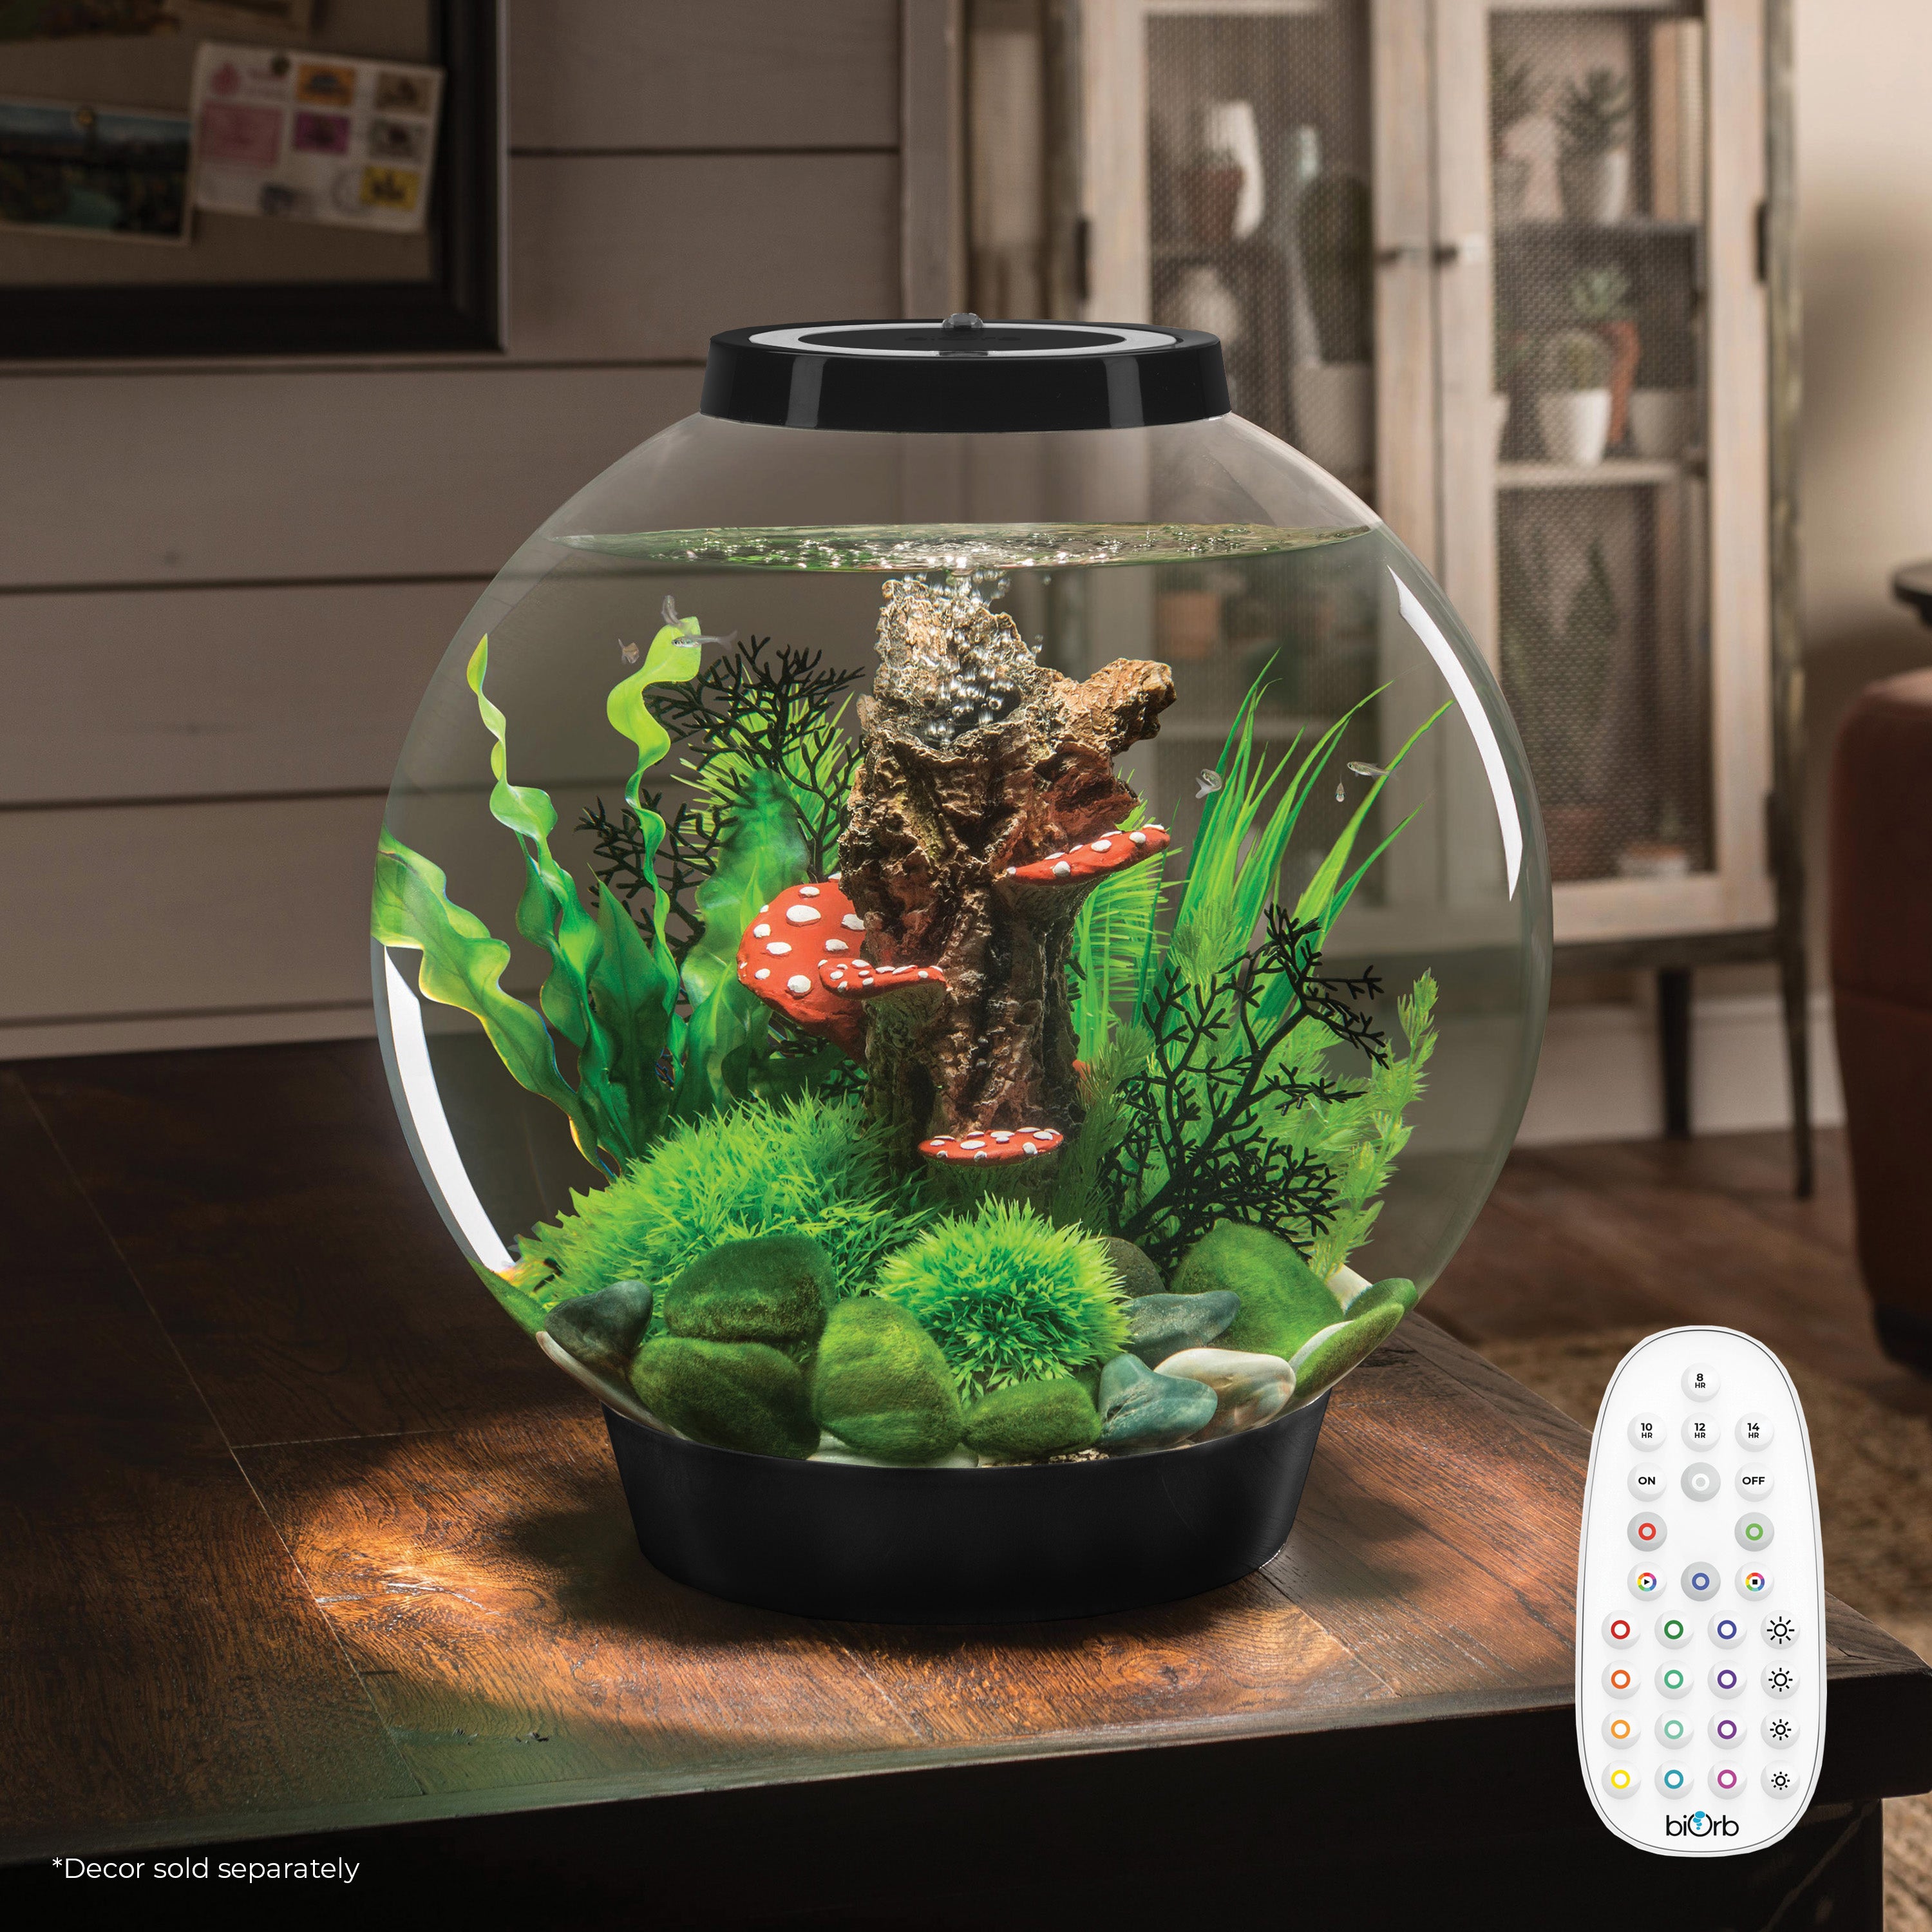 Get inspiration for your aquarium with CLASSIC 30 Aquarium with MCR Light - 8 gallon available in black